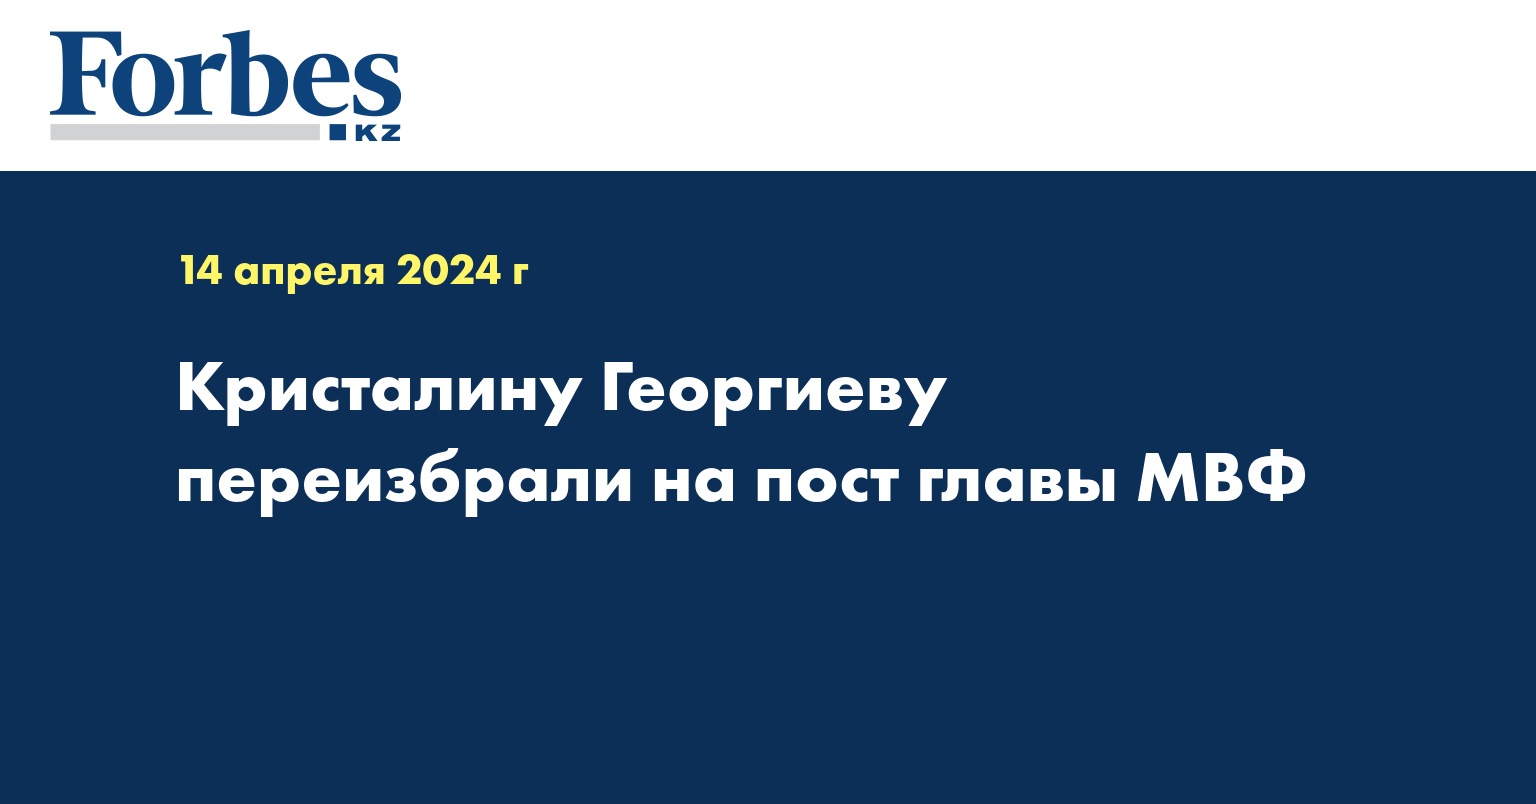 Кристалину Георгиеву переизбрали на пост главы МВФ